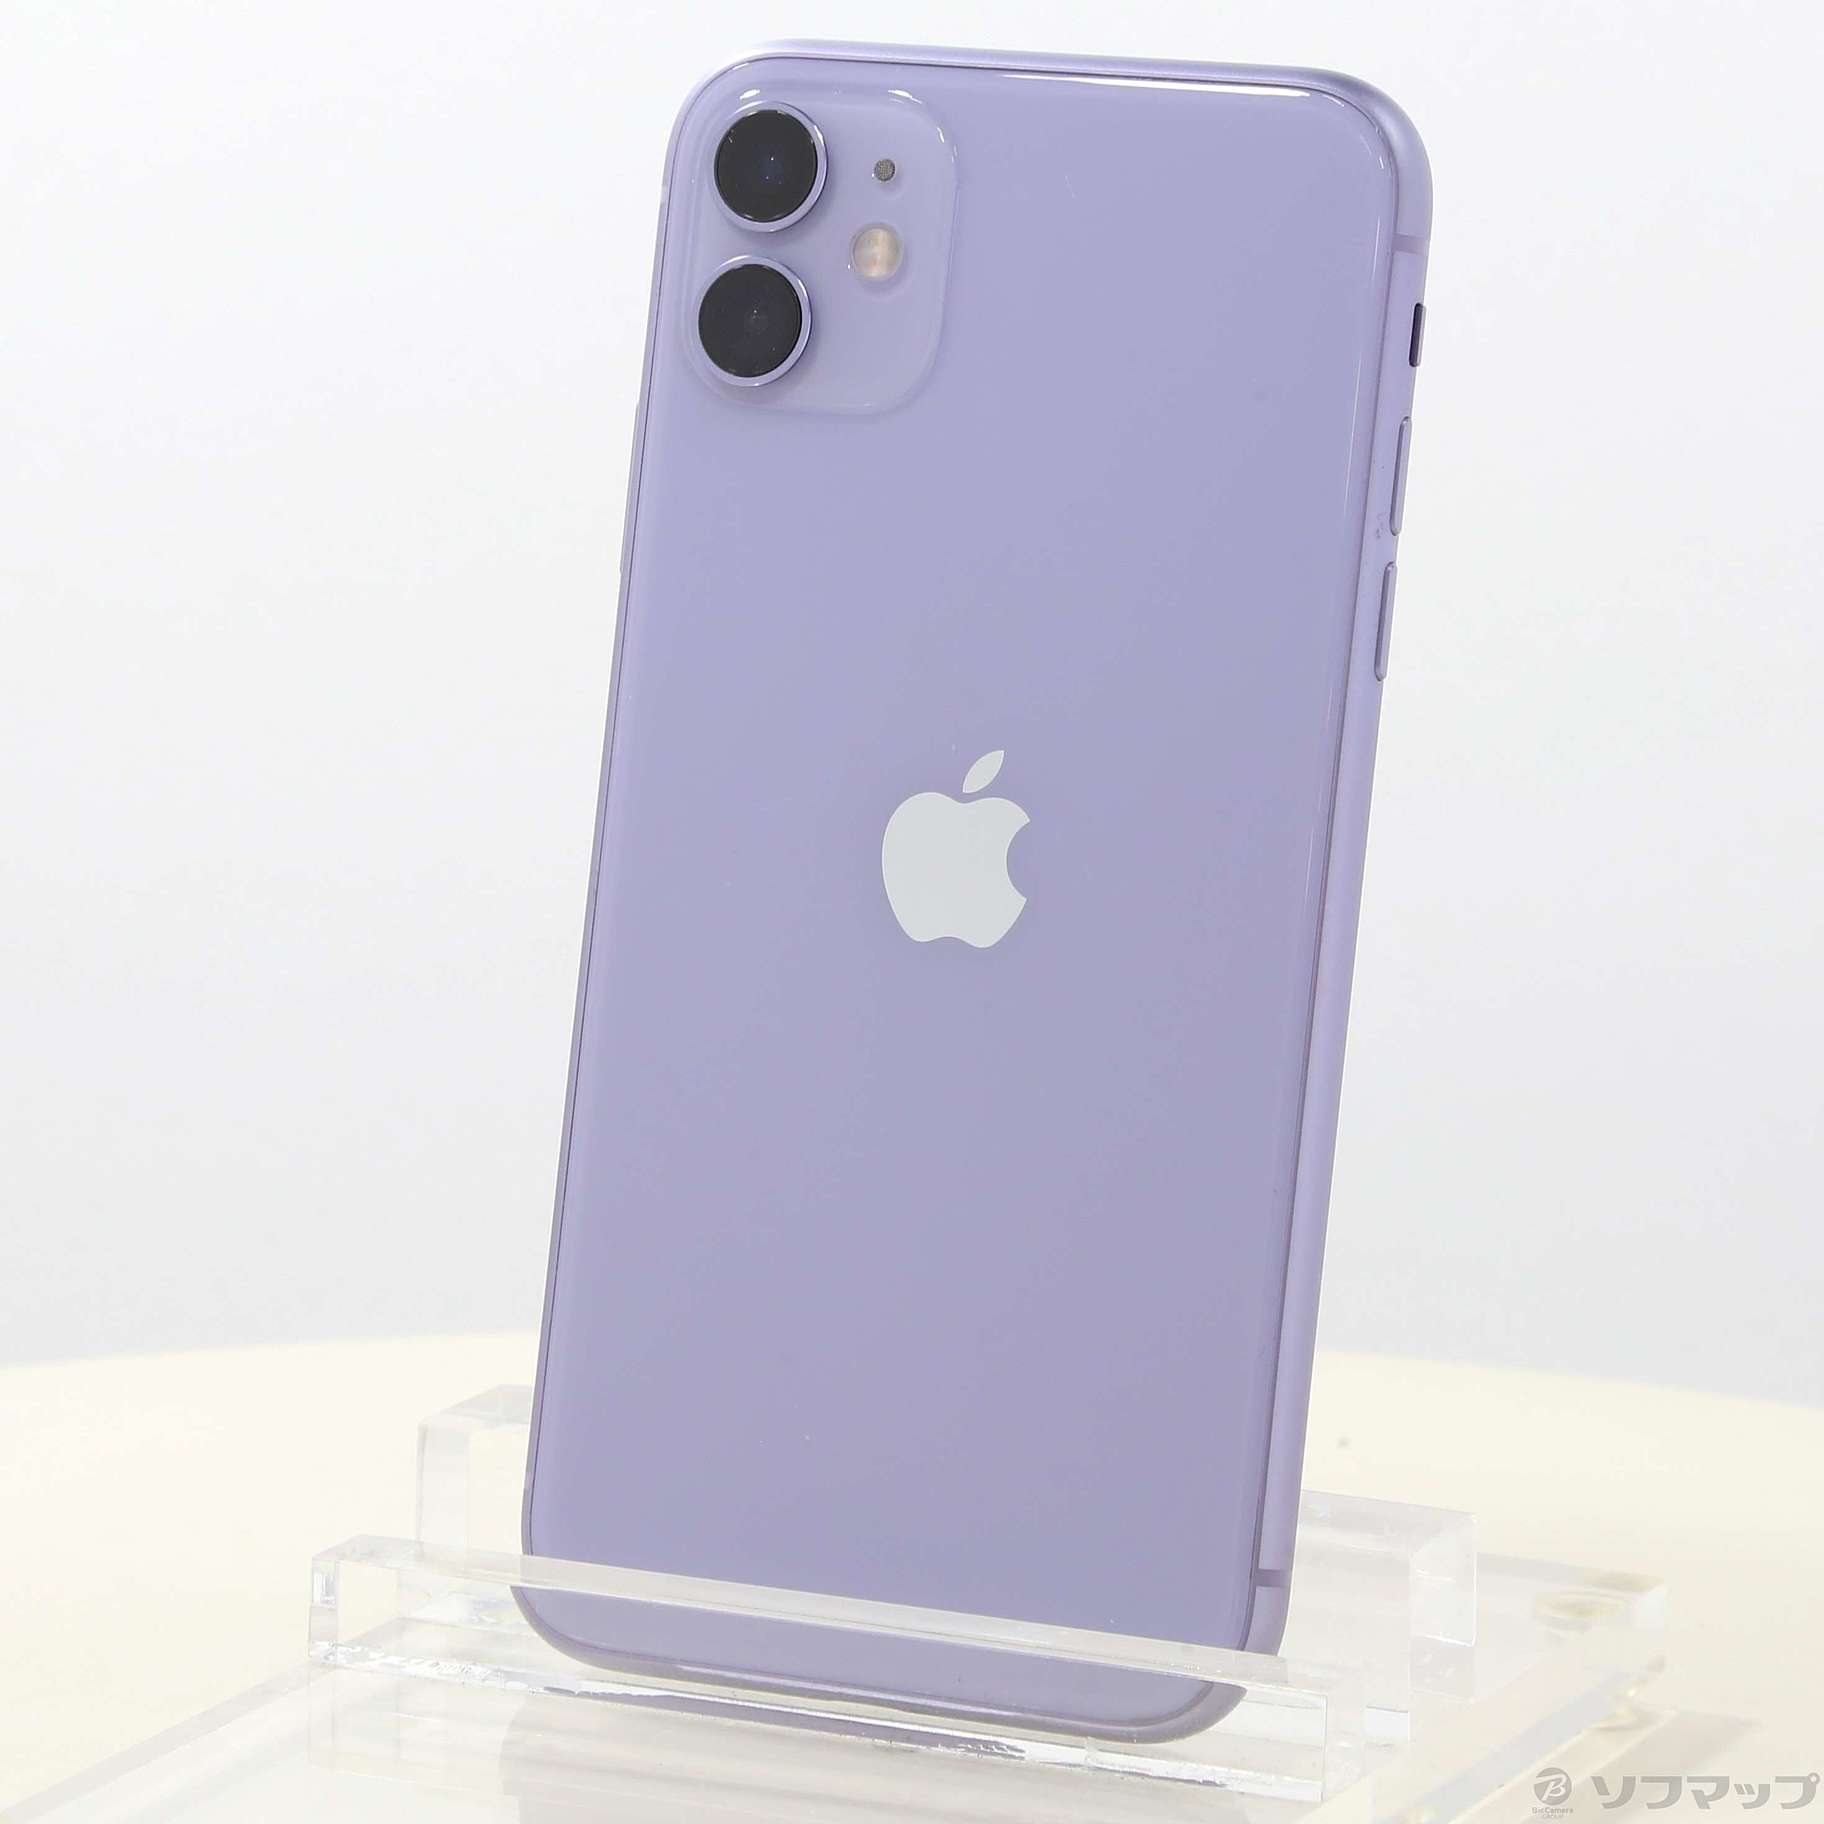 iPhone11 64GB Purple SIMフリー